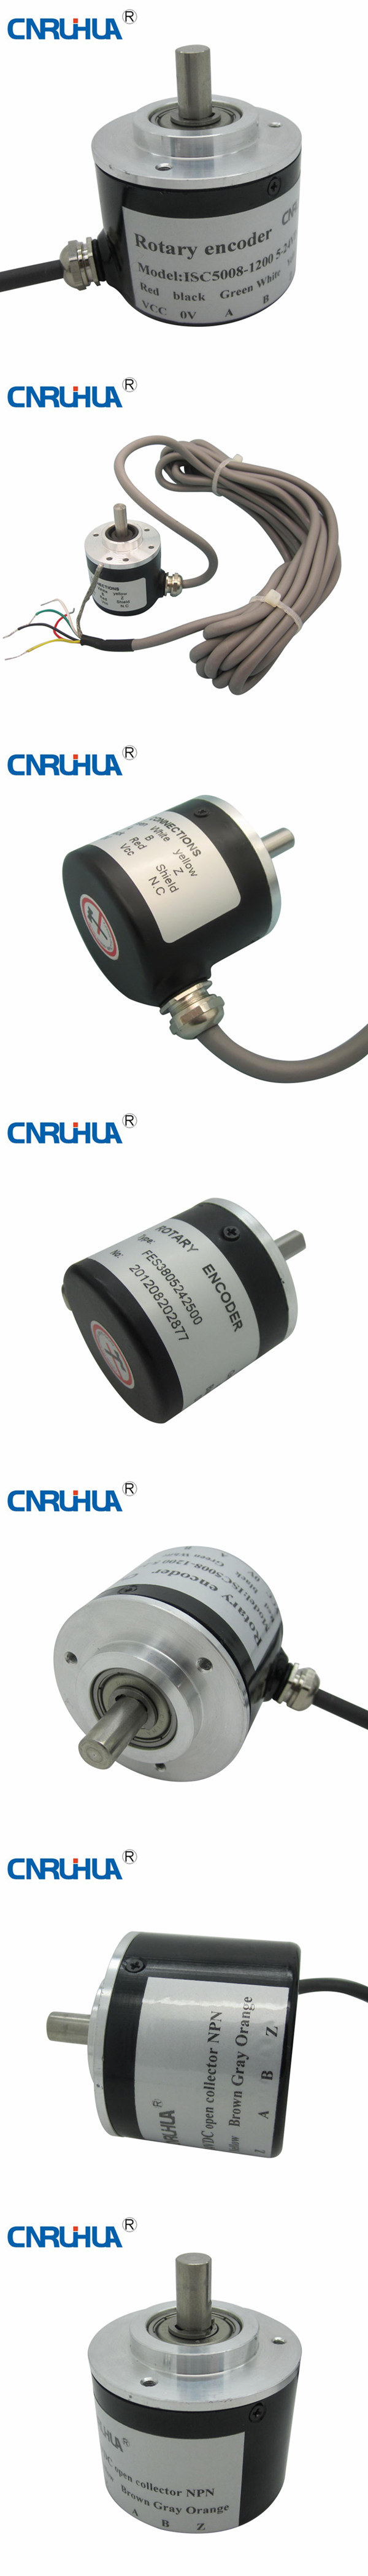 Incremental 40mm Rotary Optical Encoder